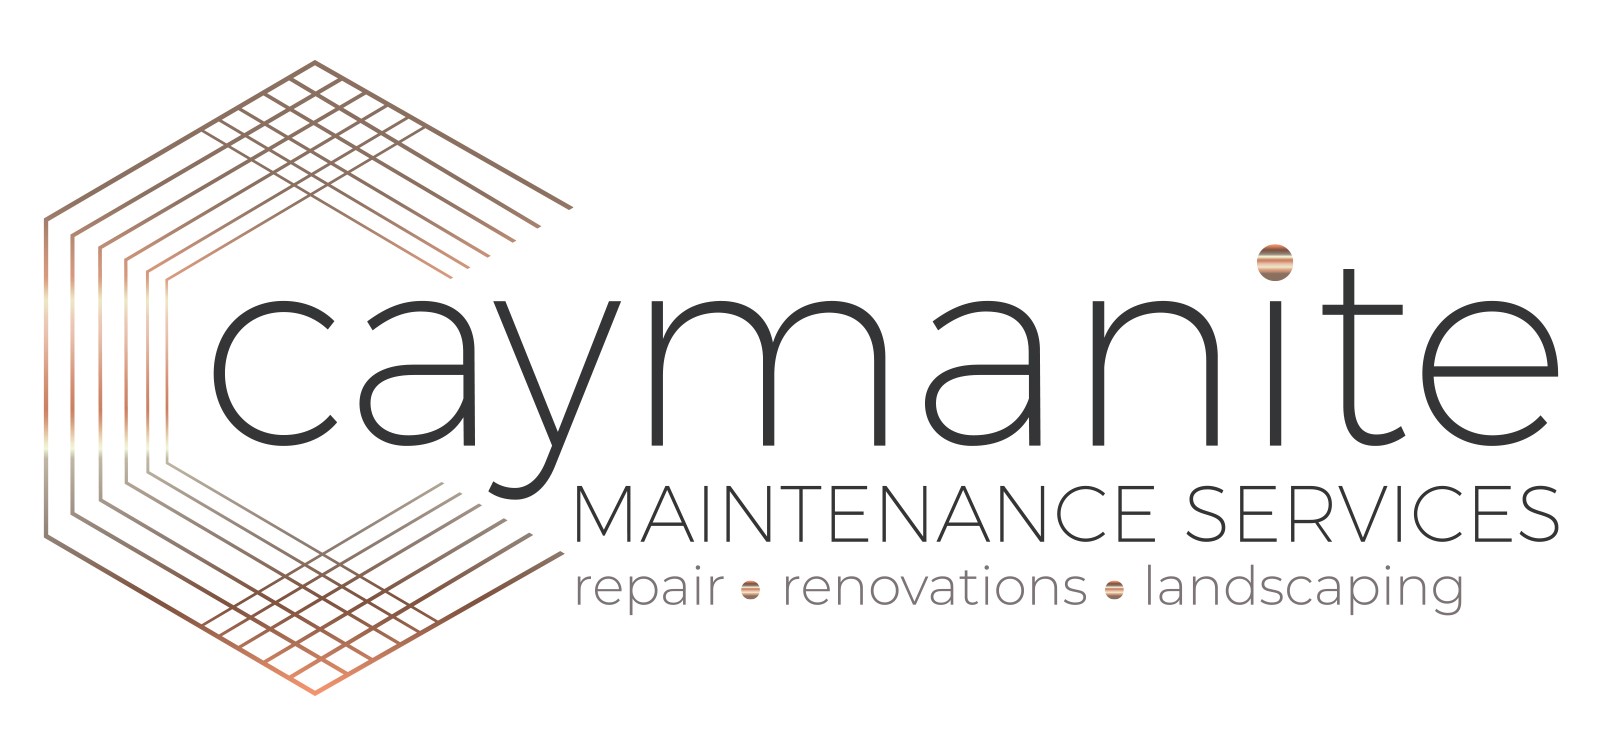 Caymanite Maintenance Services Ltd